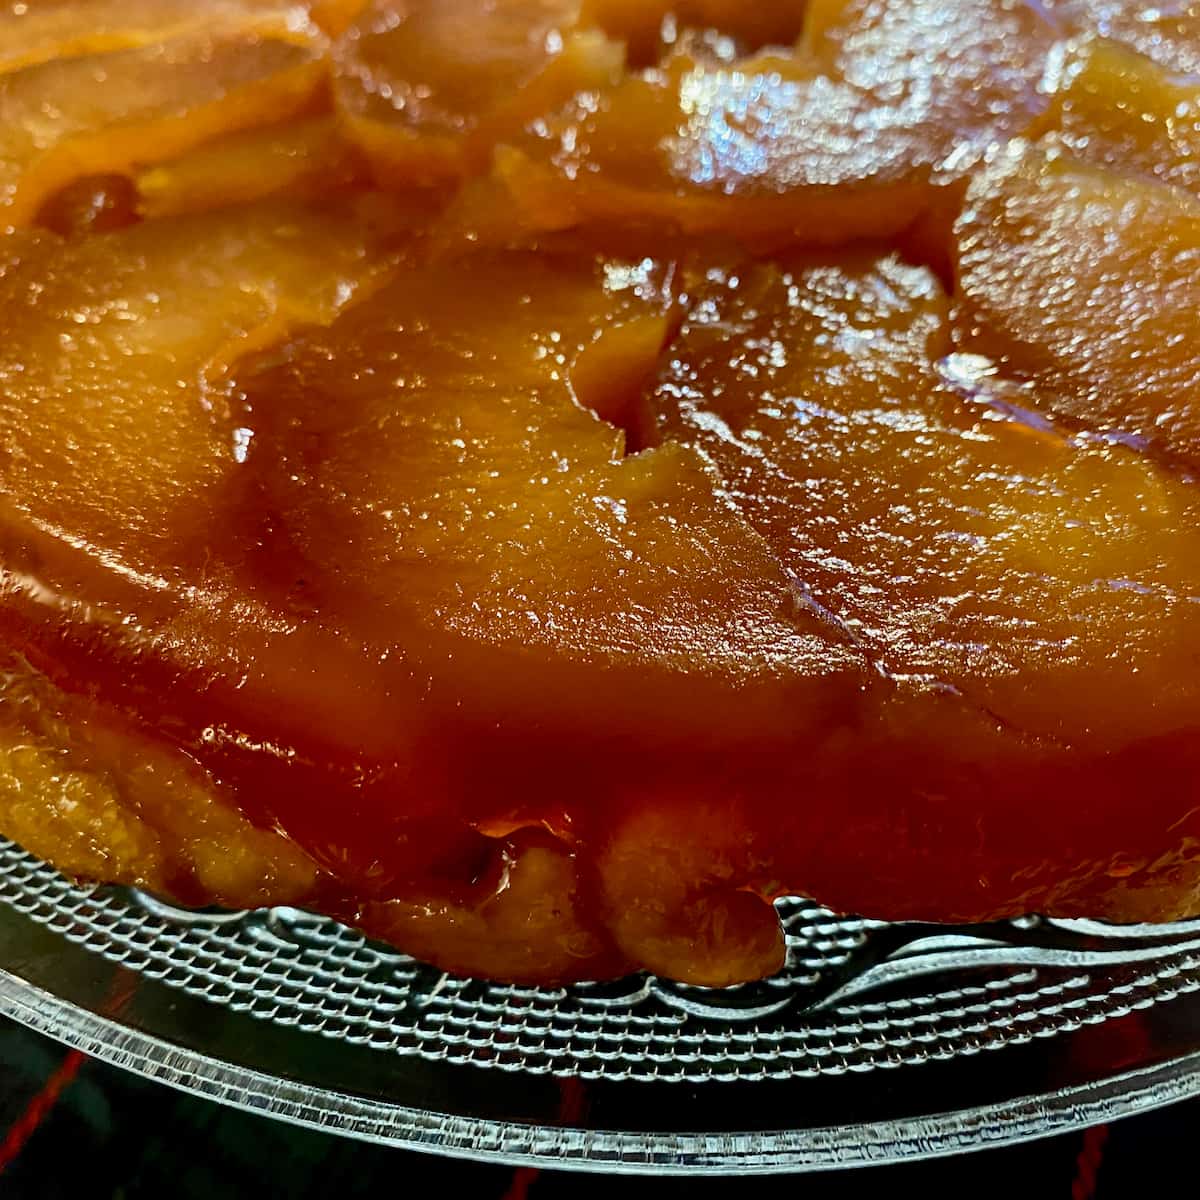 https://www.madaboutmacarons.com/wp-content/uploads/2022/09/French-tarte-tatin-apple-dessert.jpg